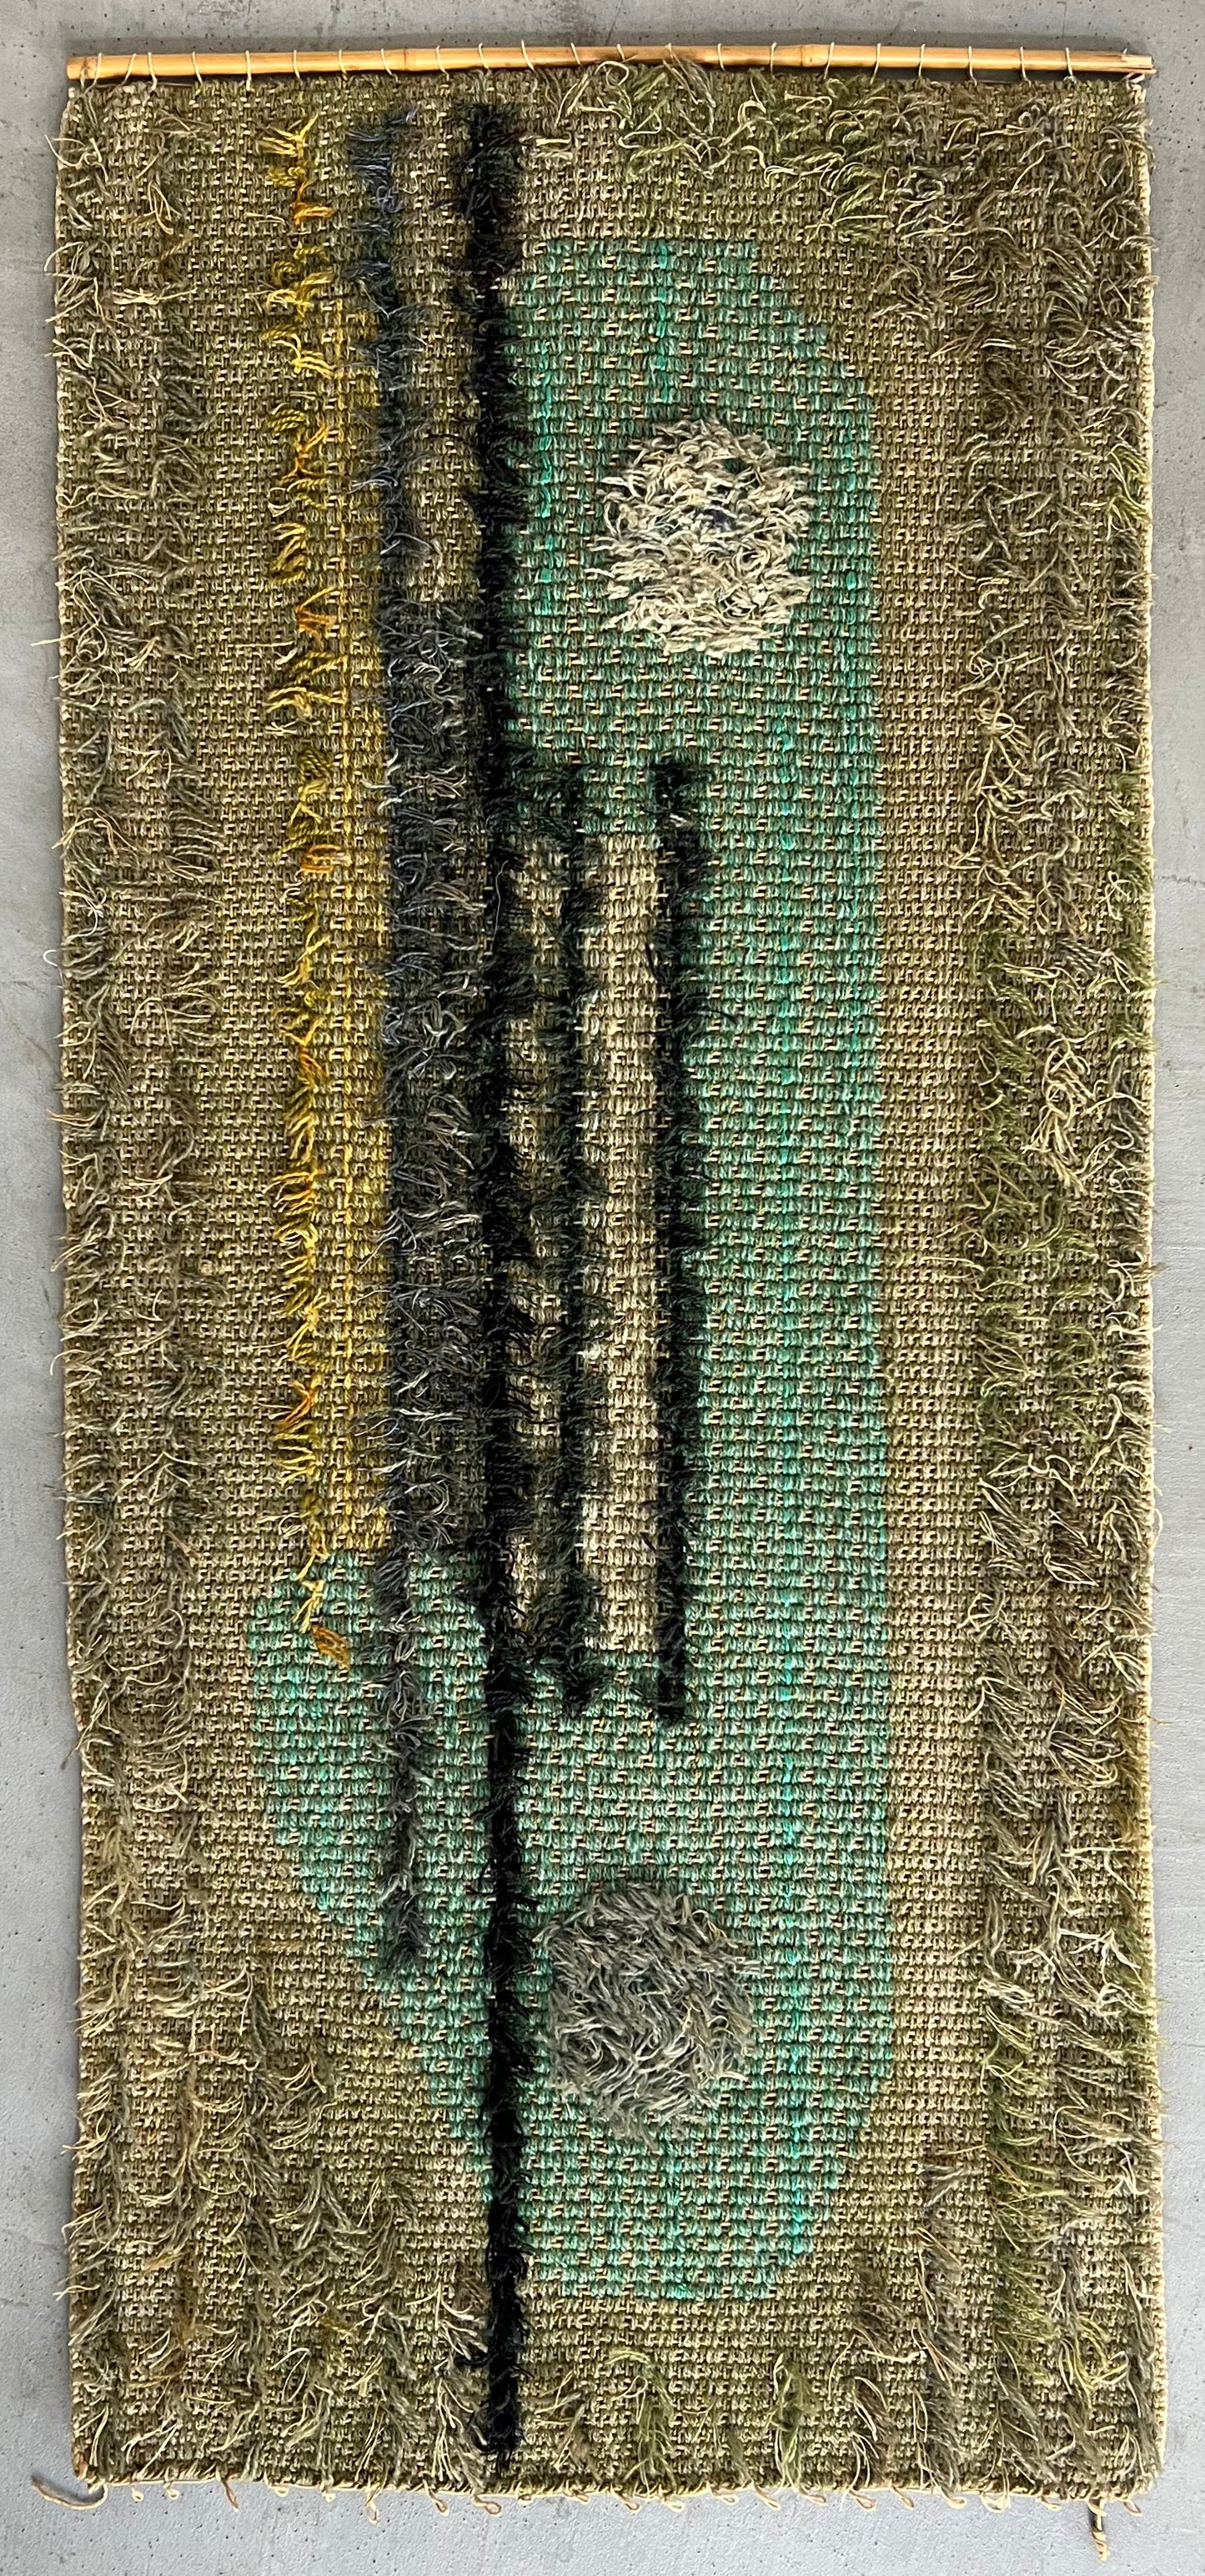 Franka Rasmussen. Tapestry